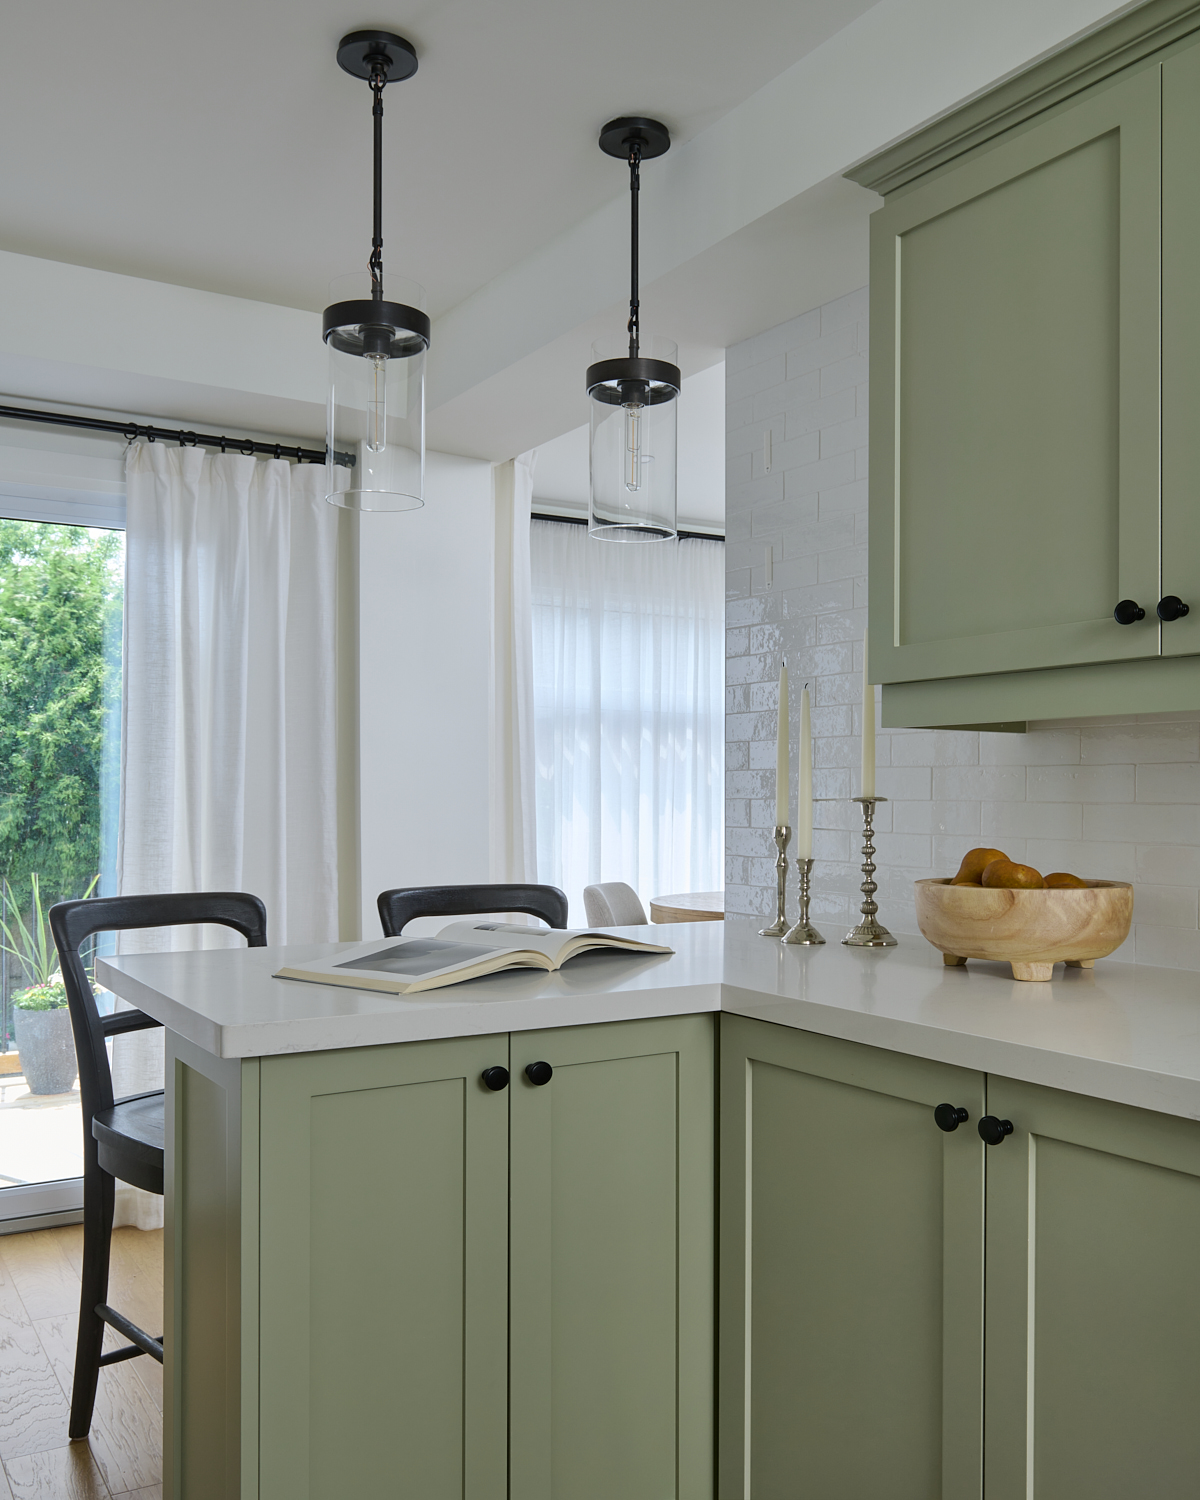 kitchen with light green cabinets, oak wood floors, black pendant lights, white countertops and tiled backsplash